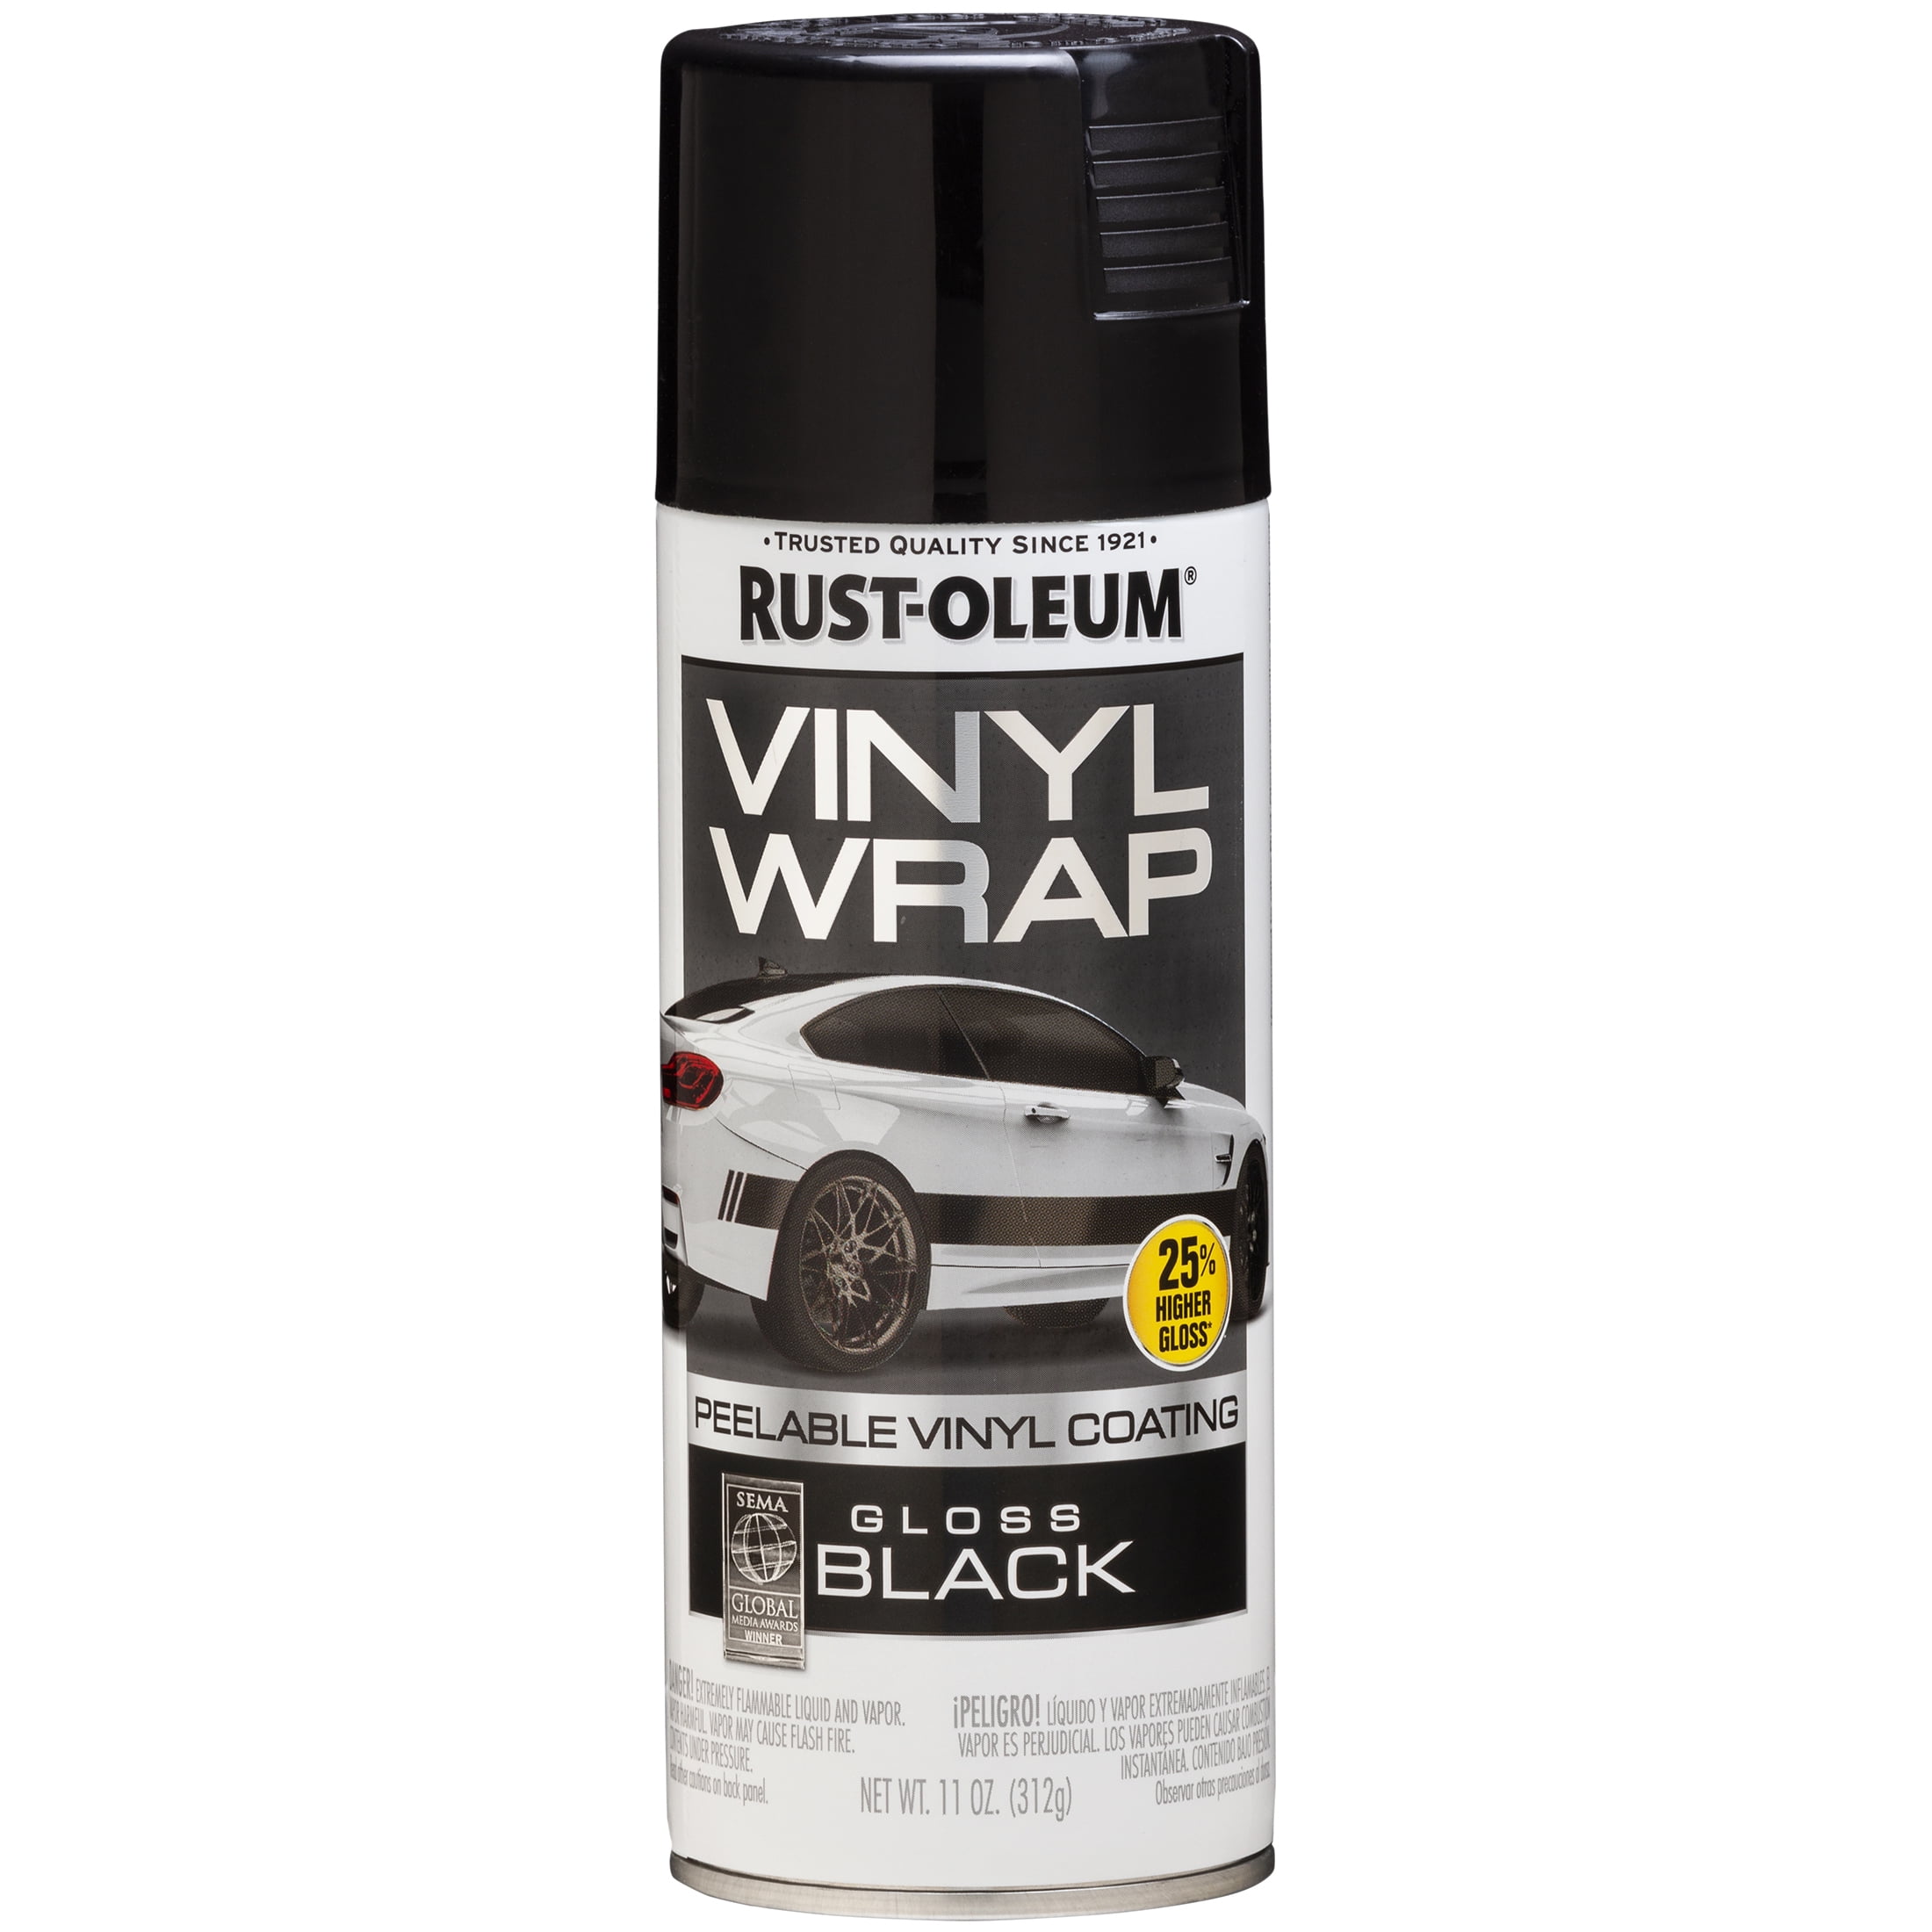 Rust-Oleum Automotive Peel Coat 6-Pack Matte Pink Spray Paint (NET